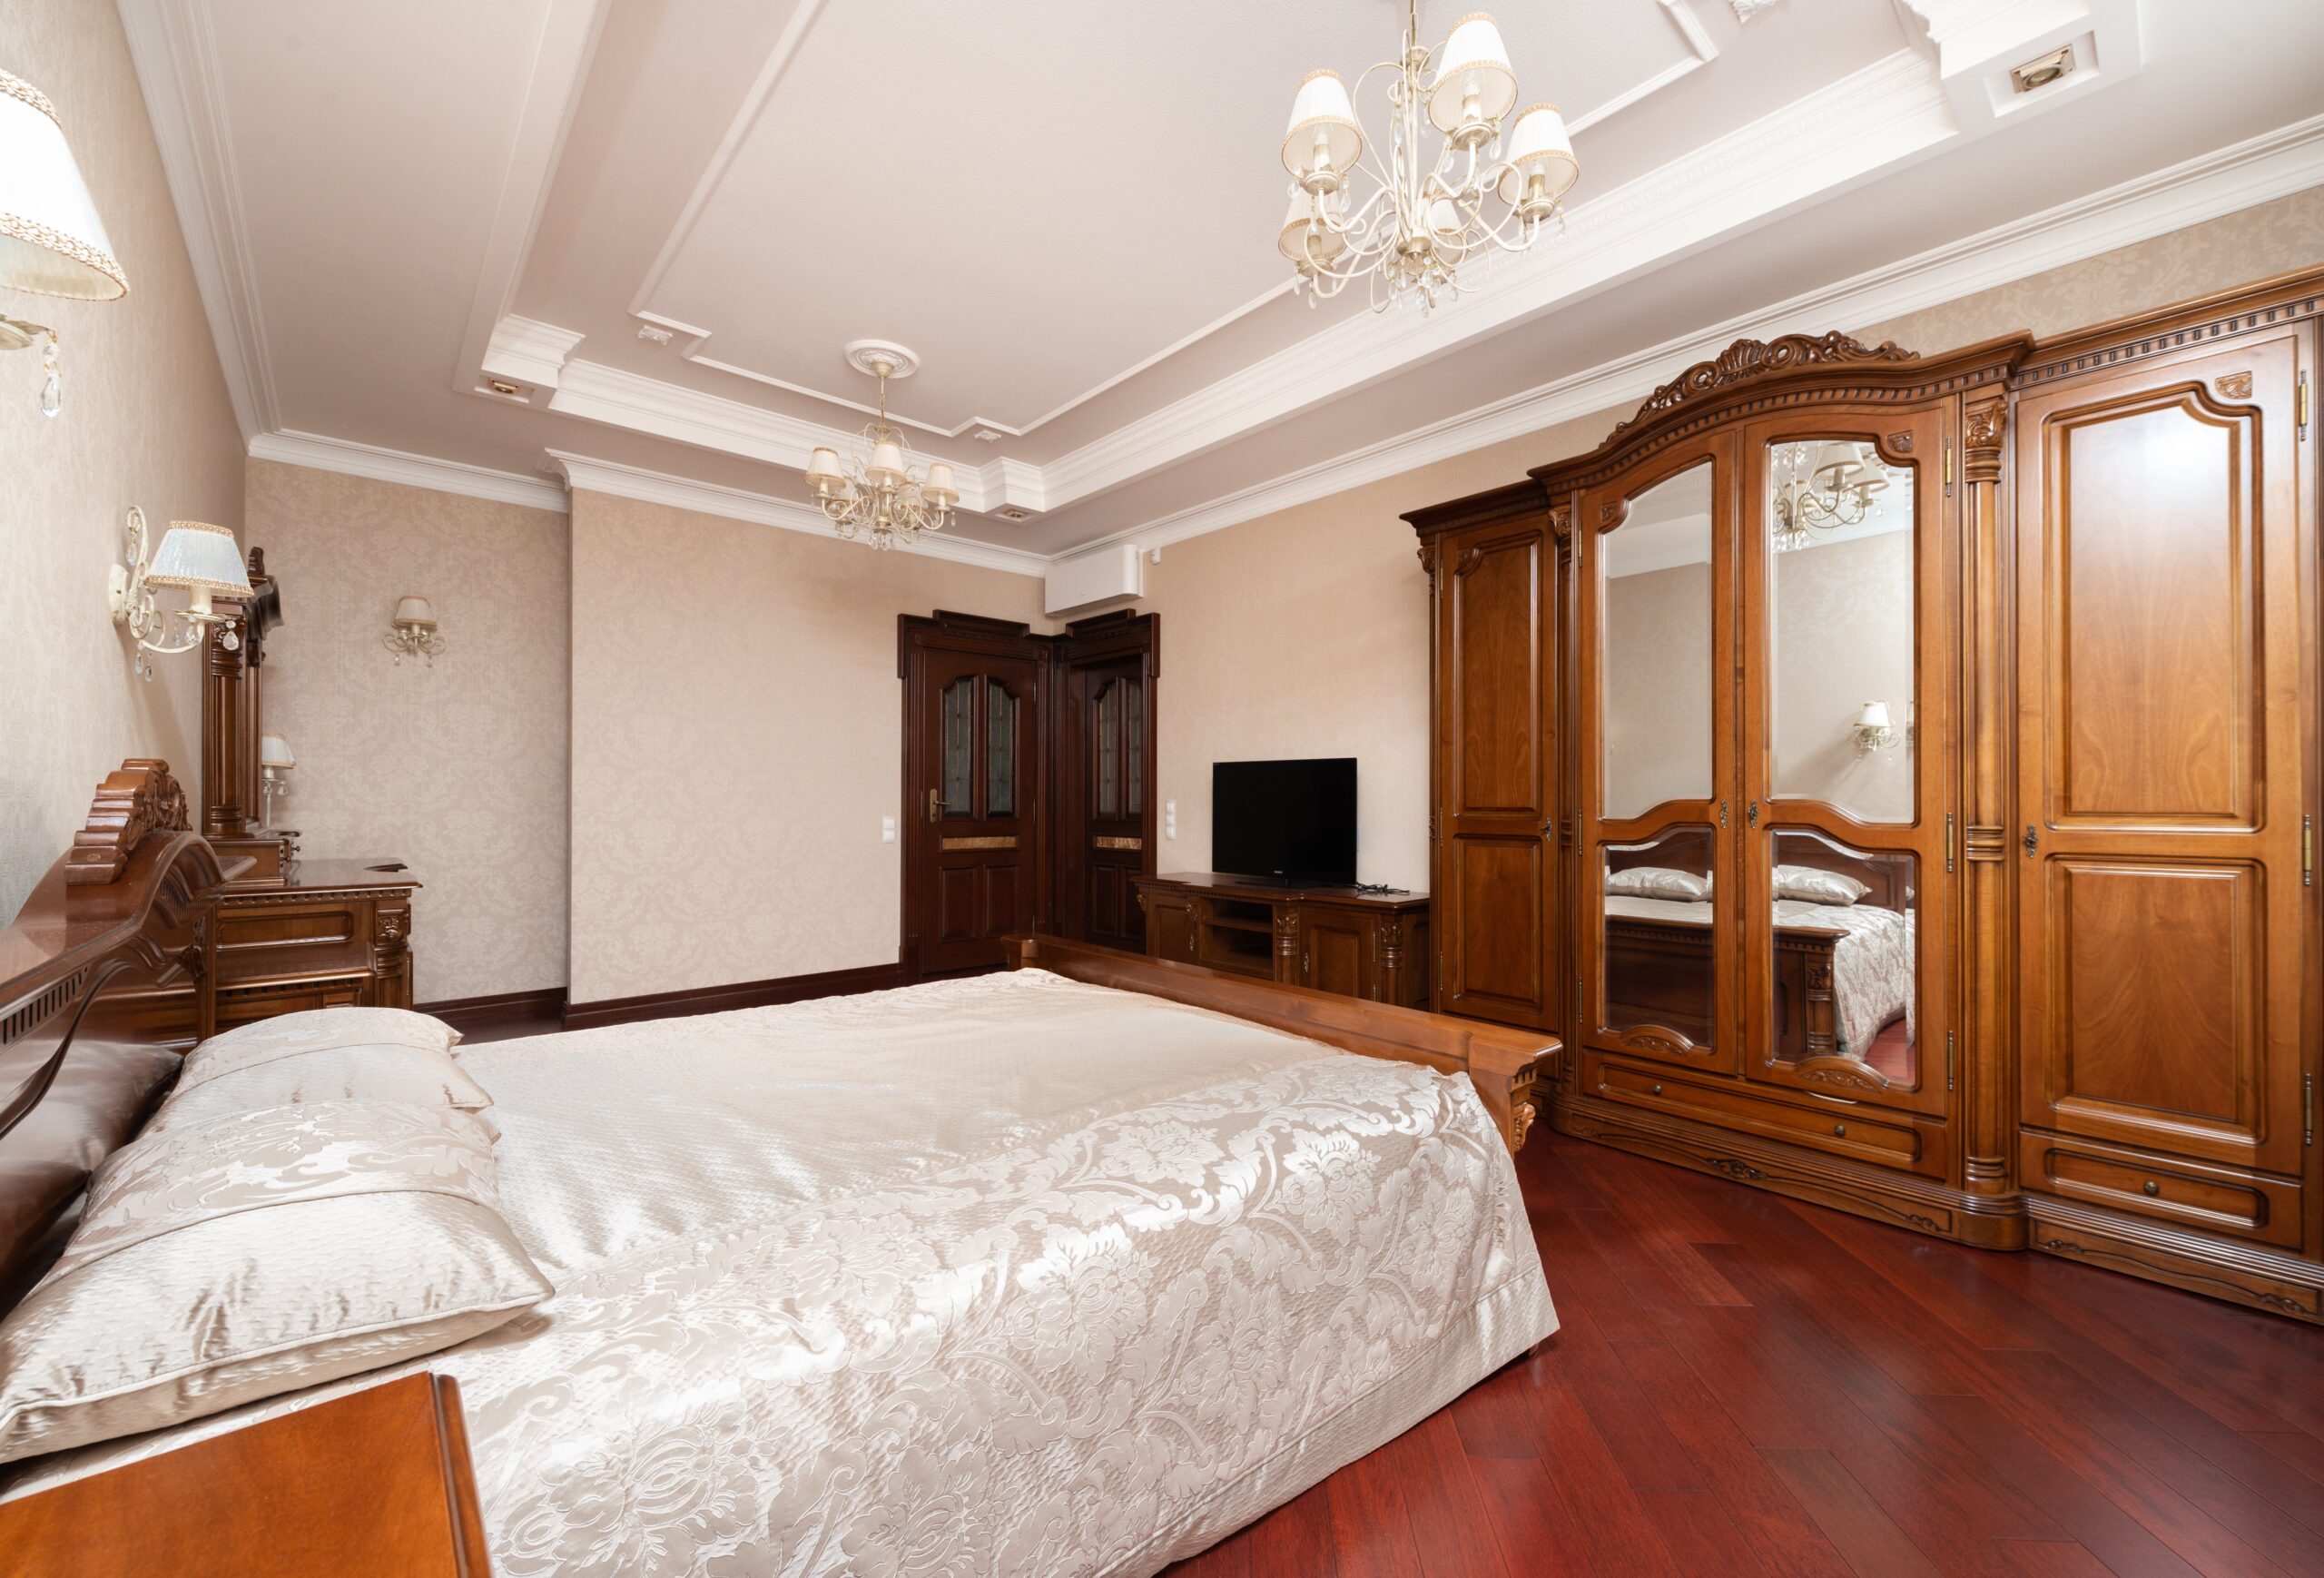 Bedroom Chandeliers Ideas: Create an Elegant Retreat